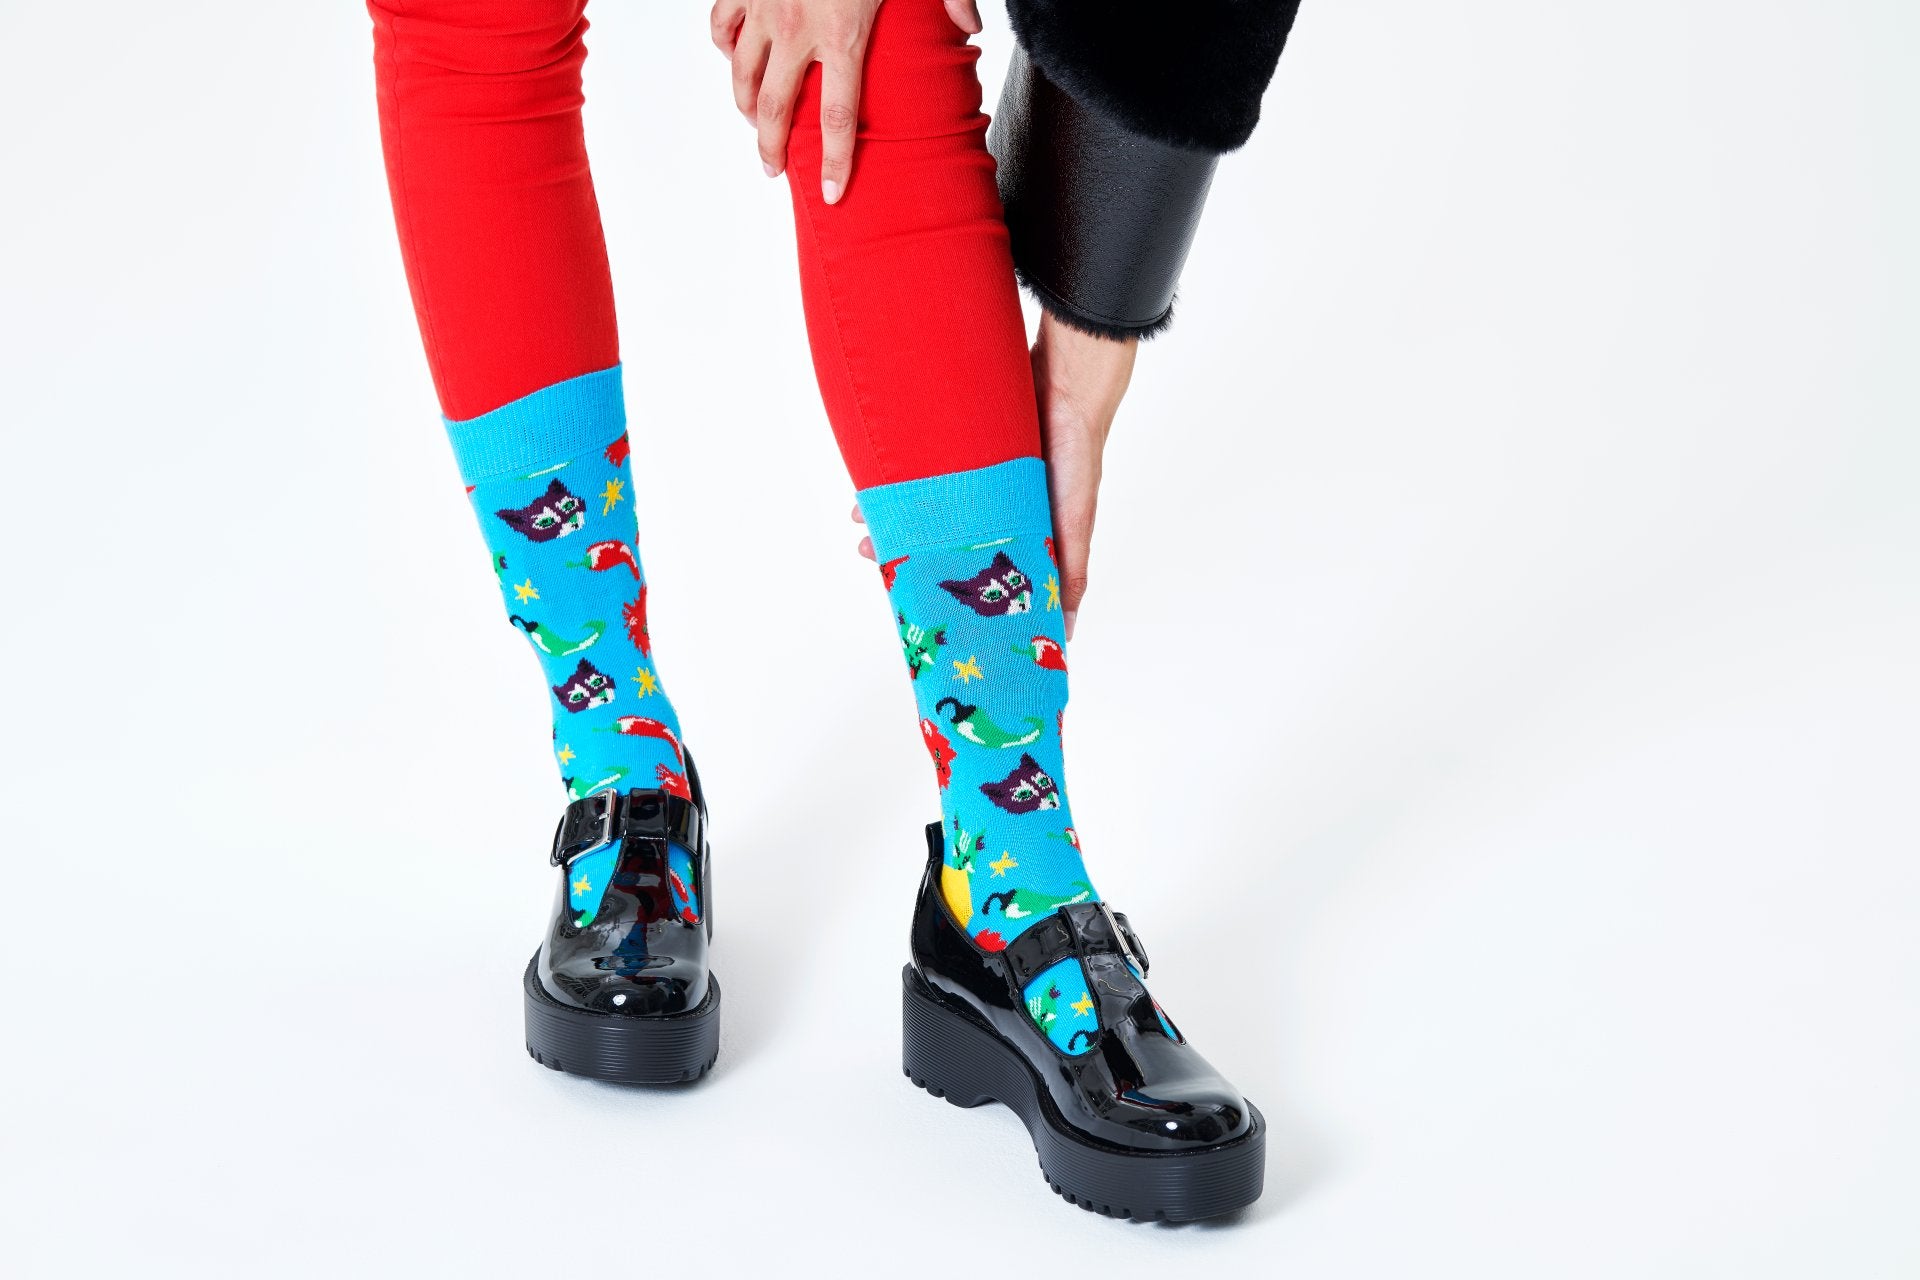 Modré ponožky Happy Socks s kočkami a chilli papričkami, vzor Chili Cat